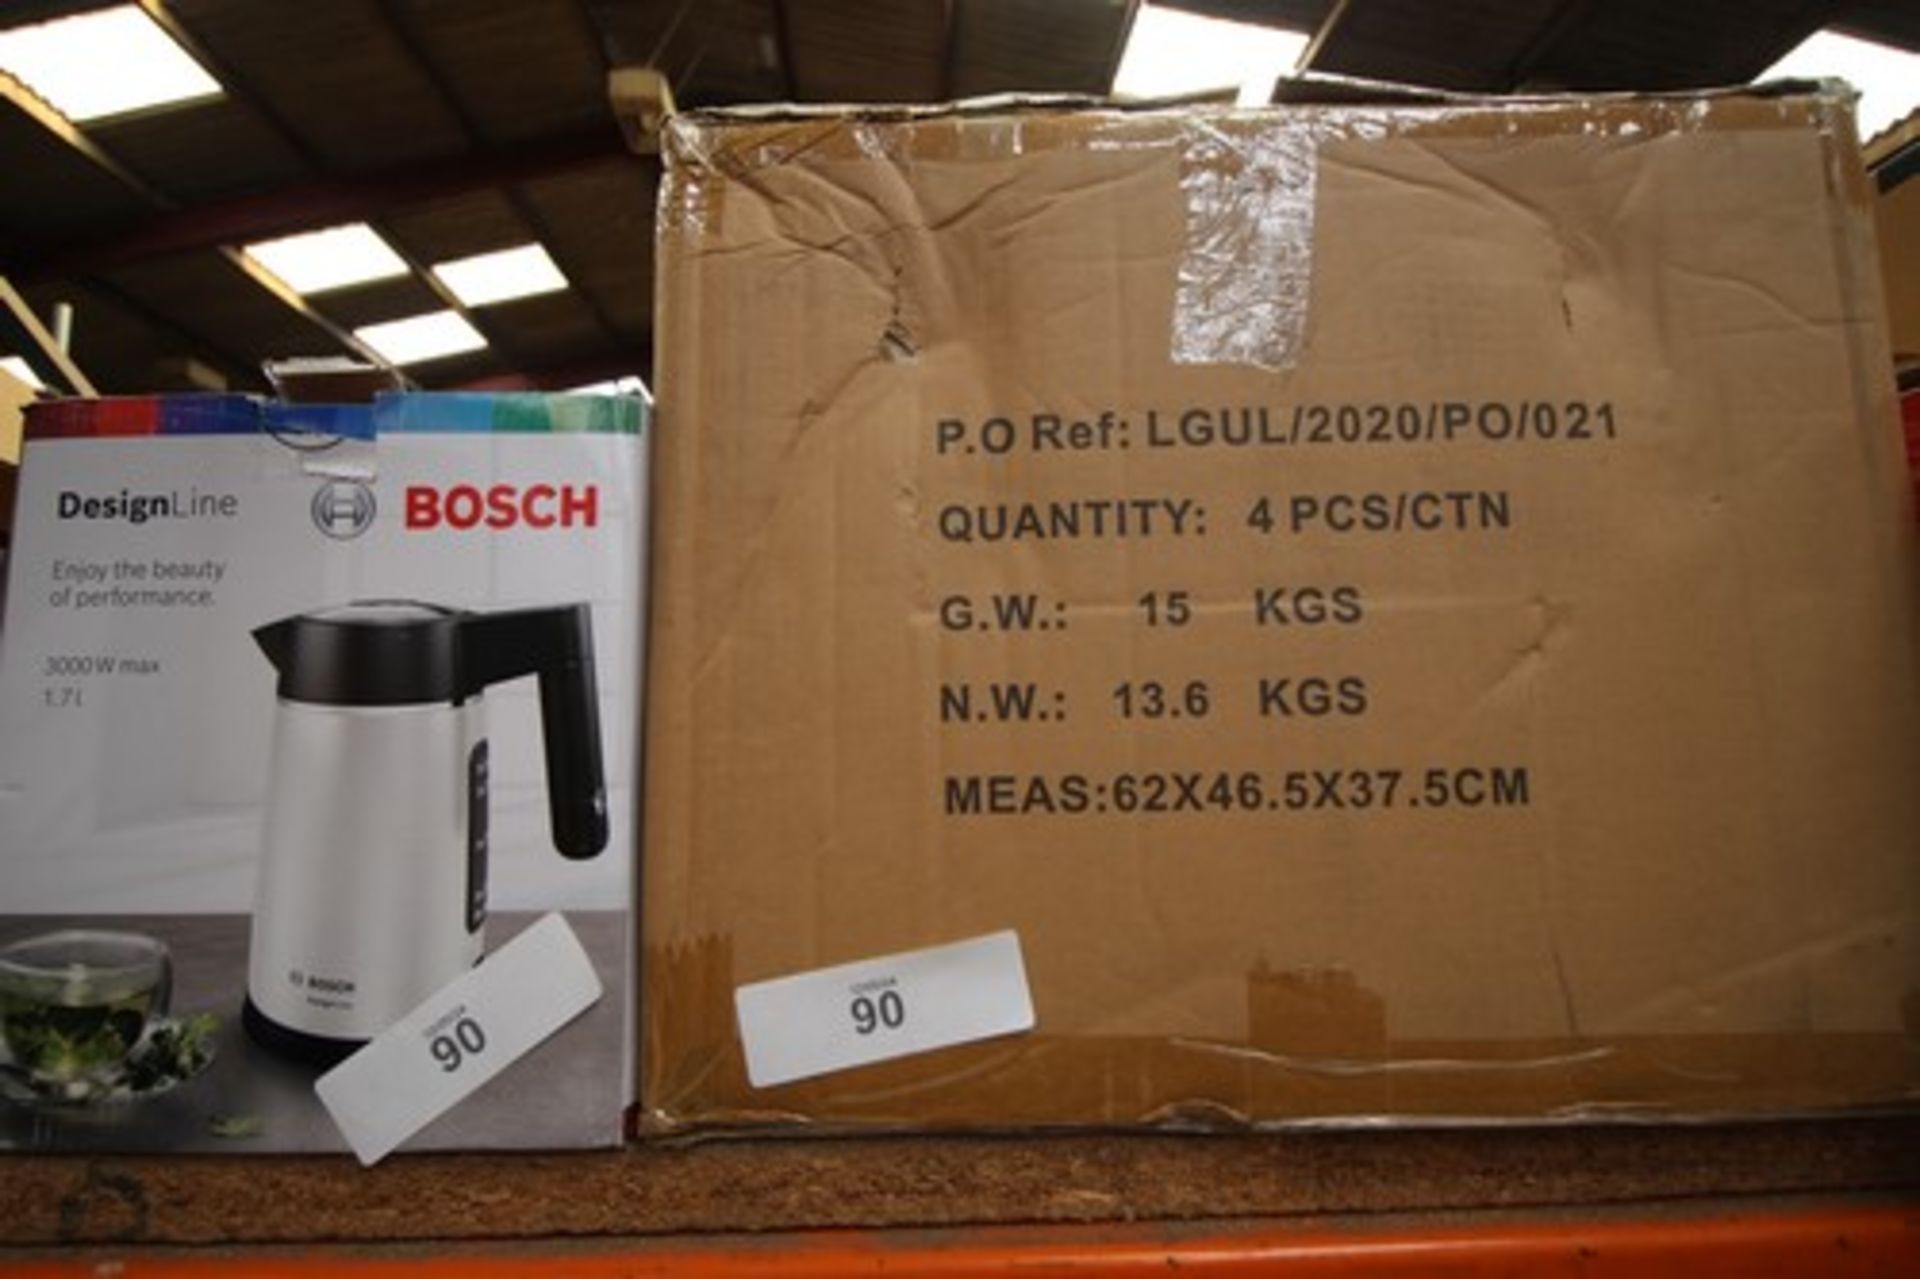 5 x kitchen appliances, including 1 x Bosch Designline 3000w kettle and 4 x Belaco BB-306 blenders -